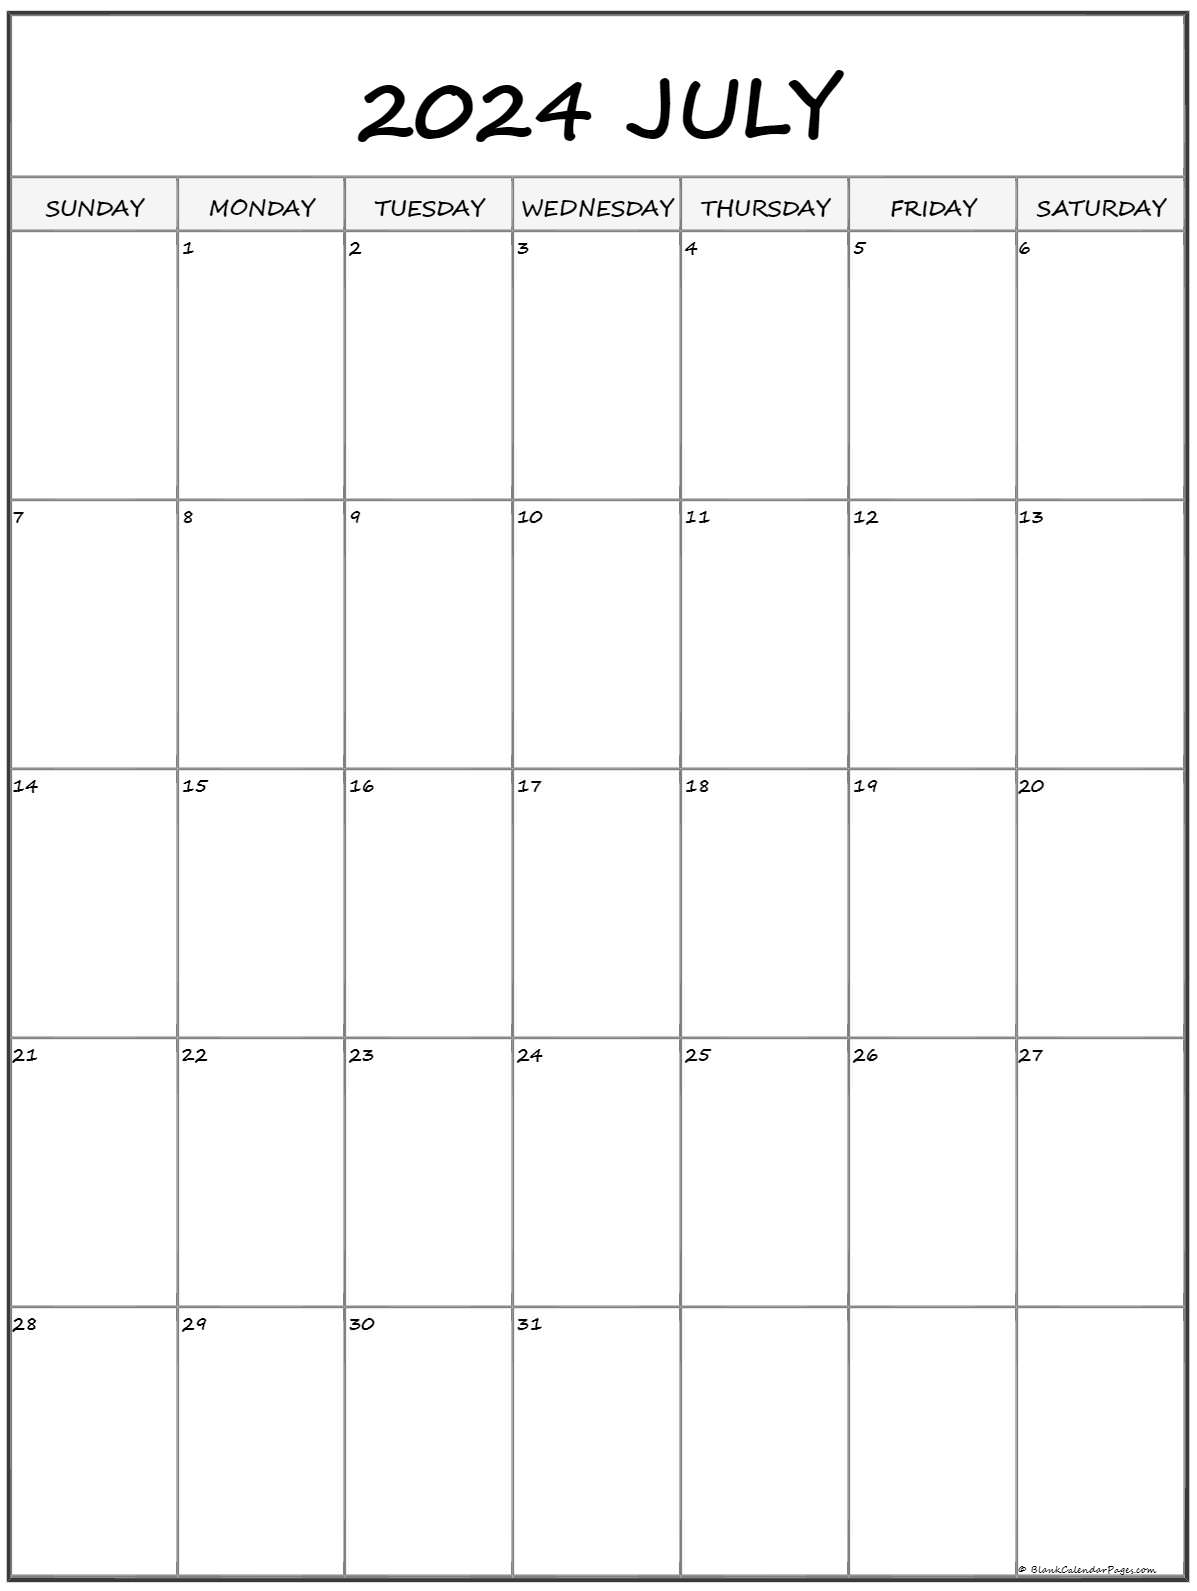 Show Me July Calendar 2023 Cool Latest List of Seaside Calendar of